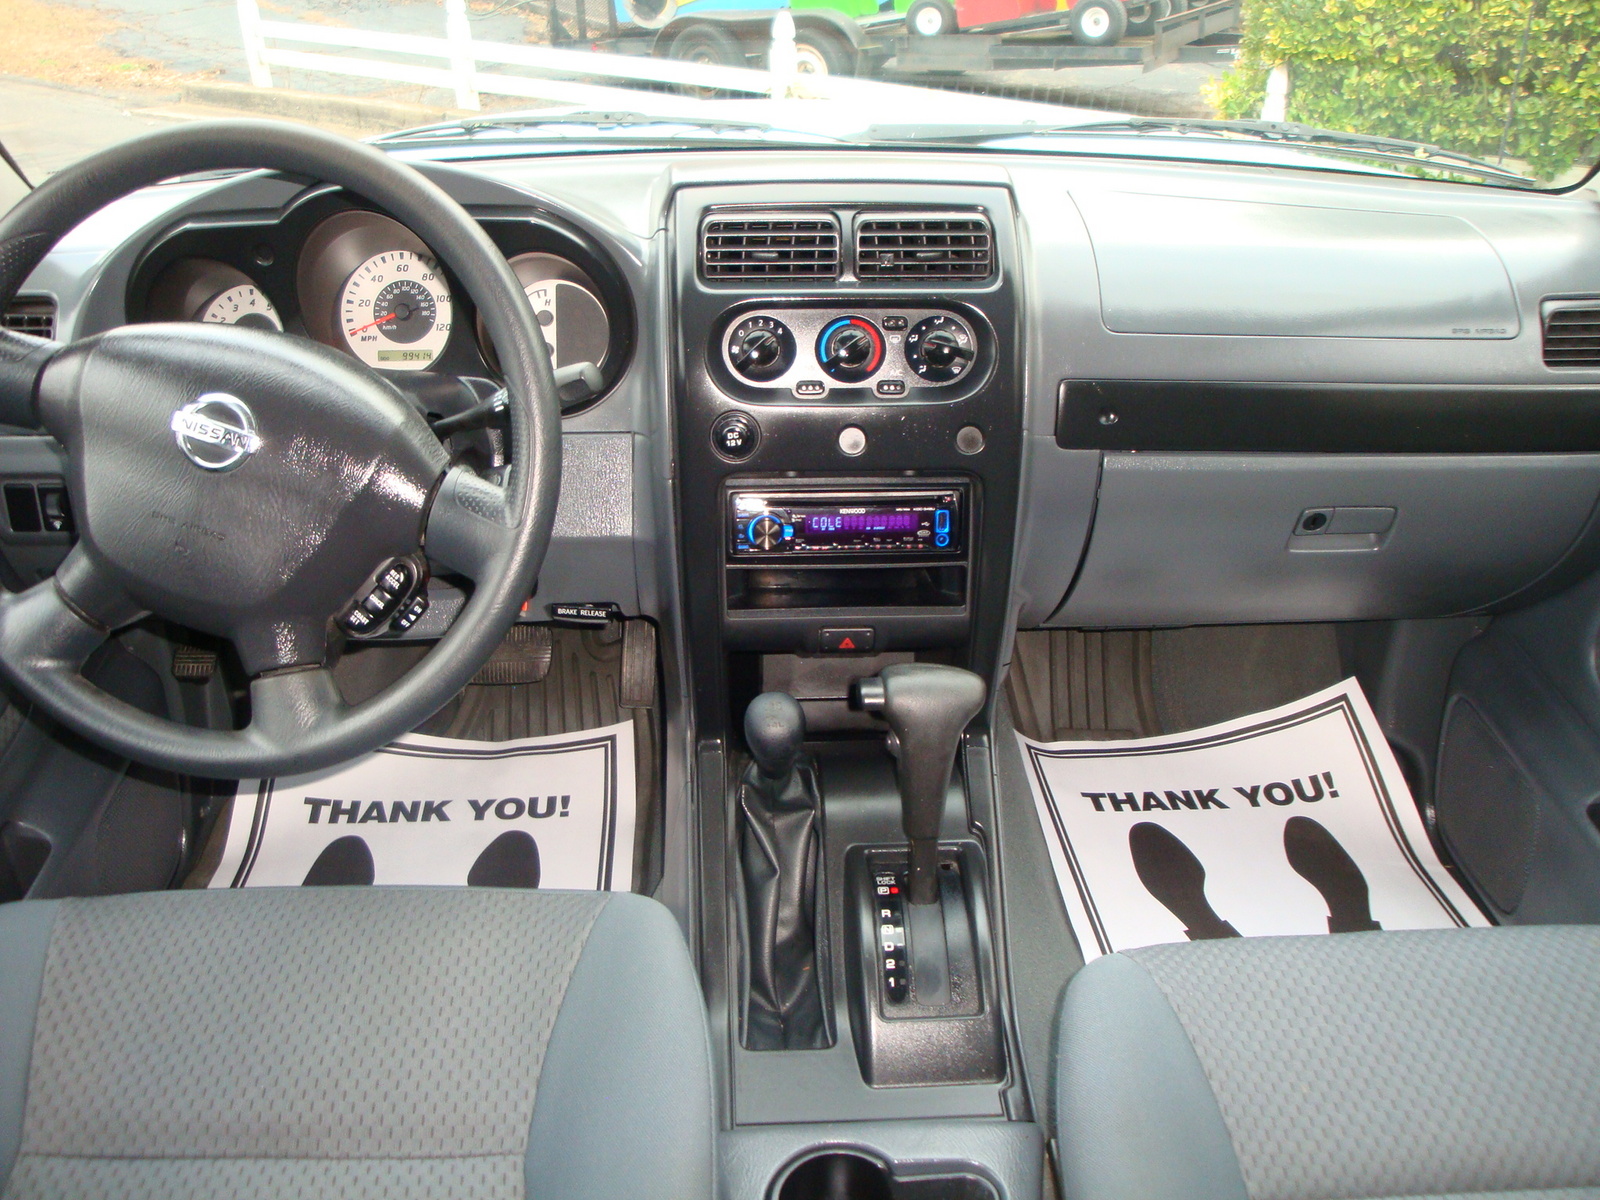 2004 Nissan xterra interior dimensions #6